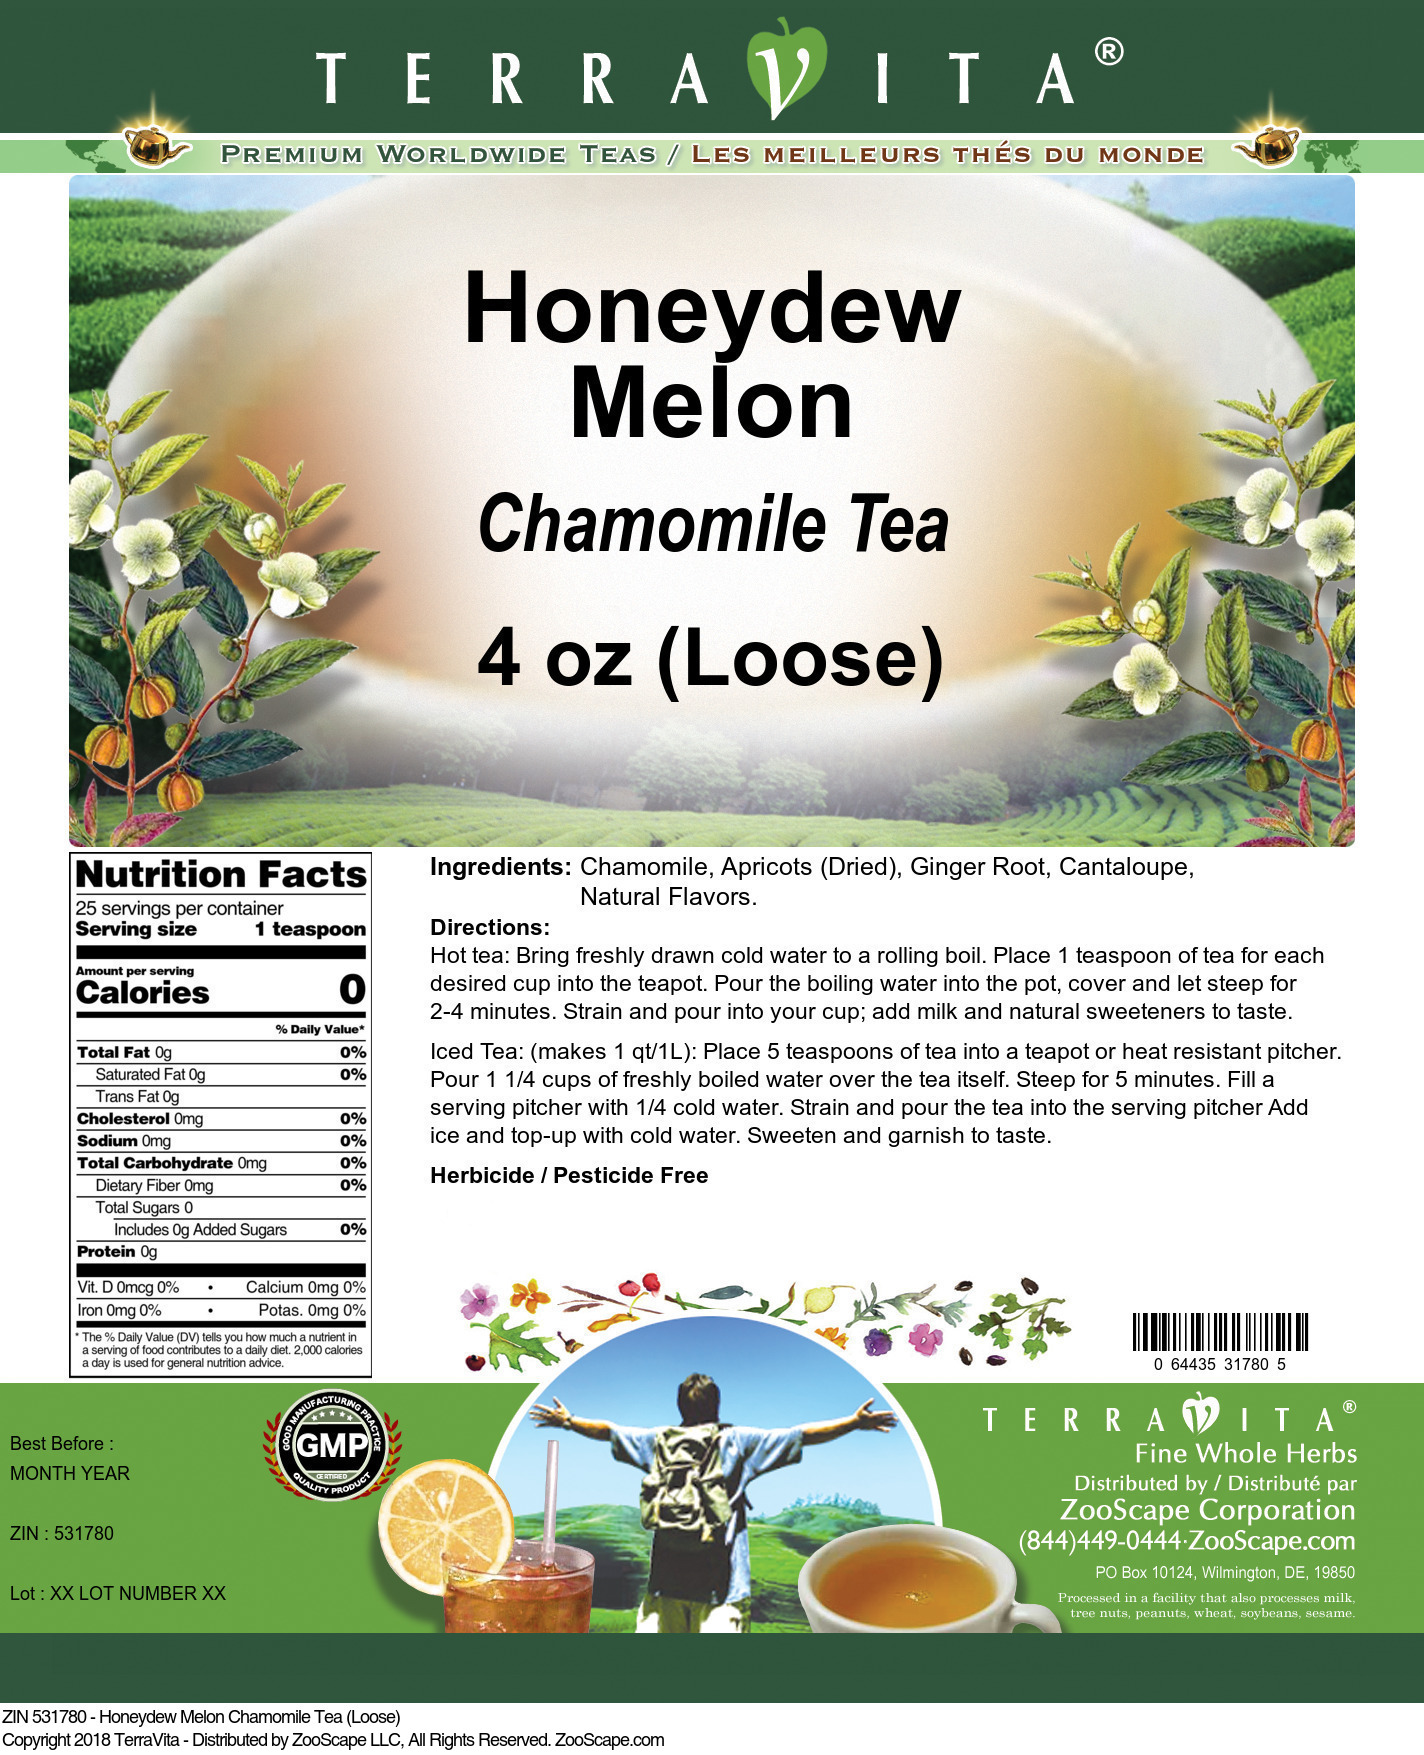 Honeydew Melon Chamomile Tea (Loose) - Label